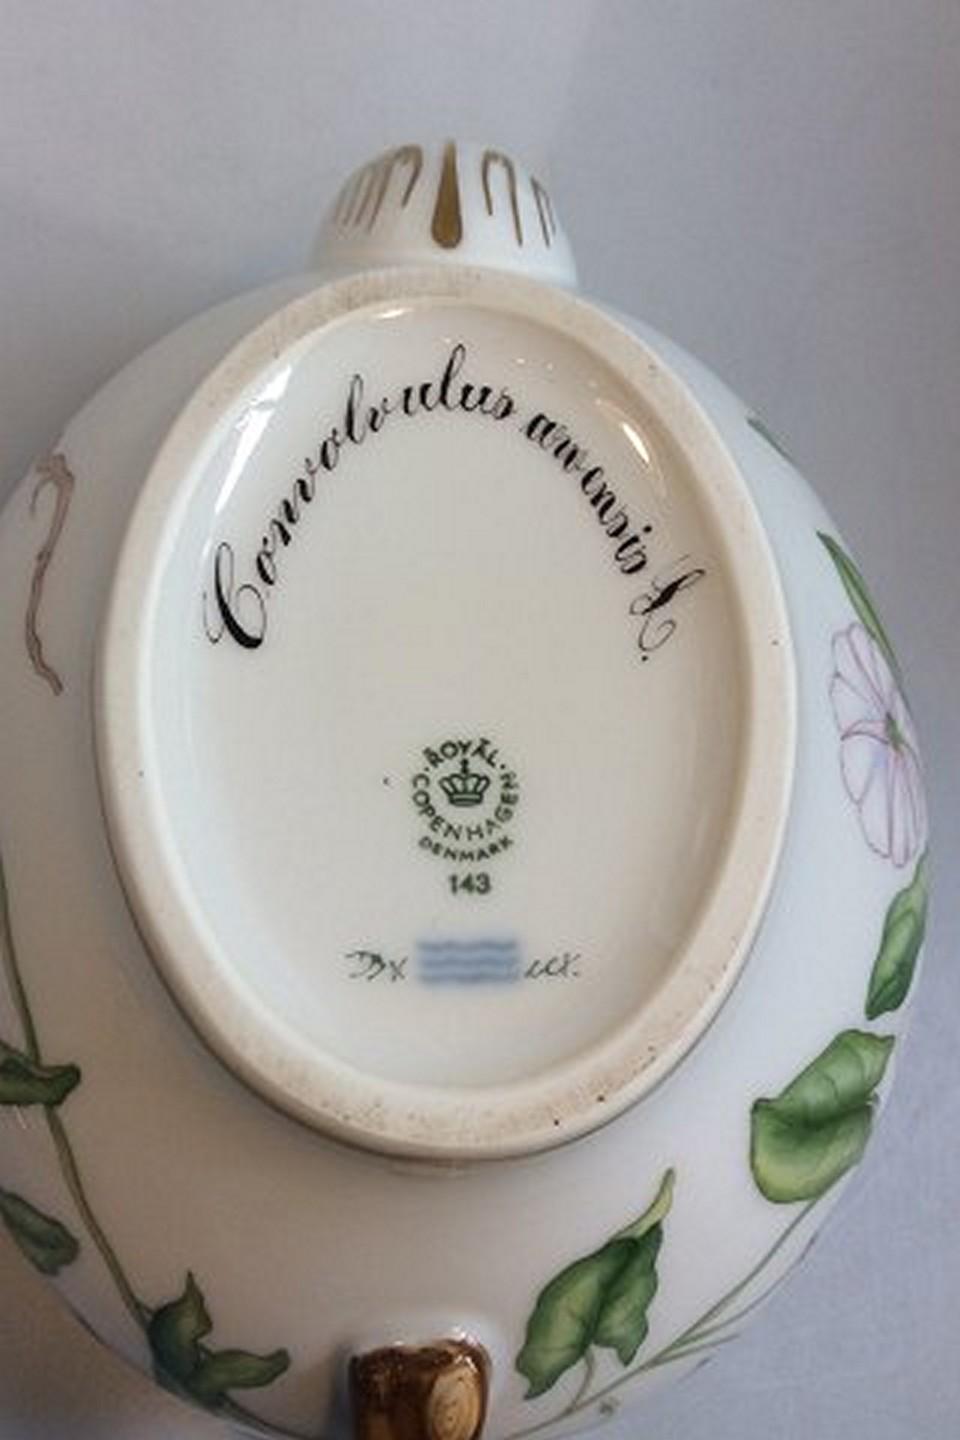 Royal Copenhagen Flora Danica tea pot with lid no. 3631 / 143.
Measures: 6 1/4